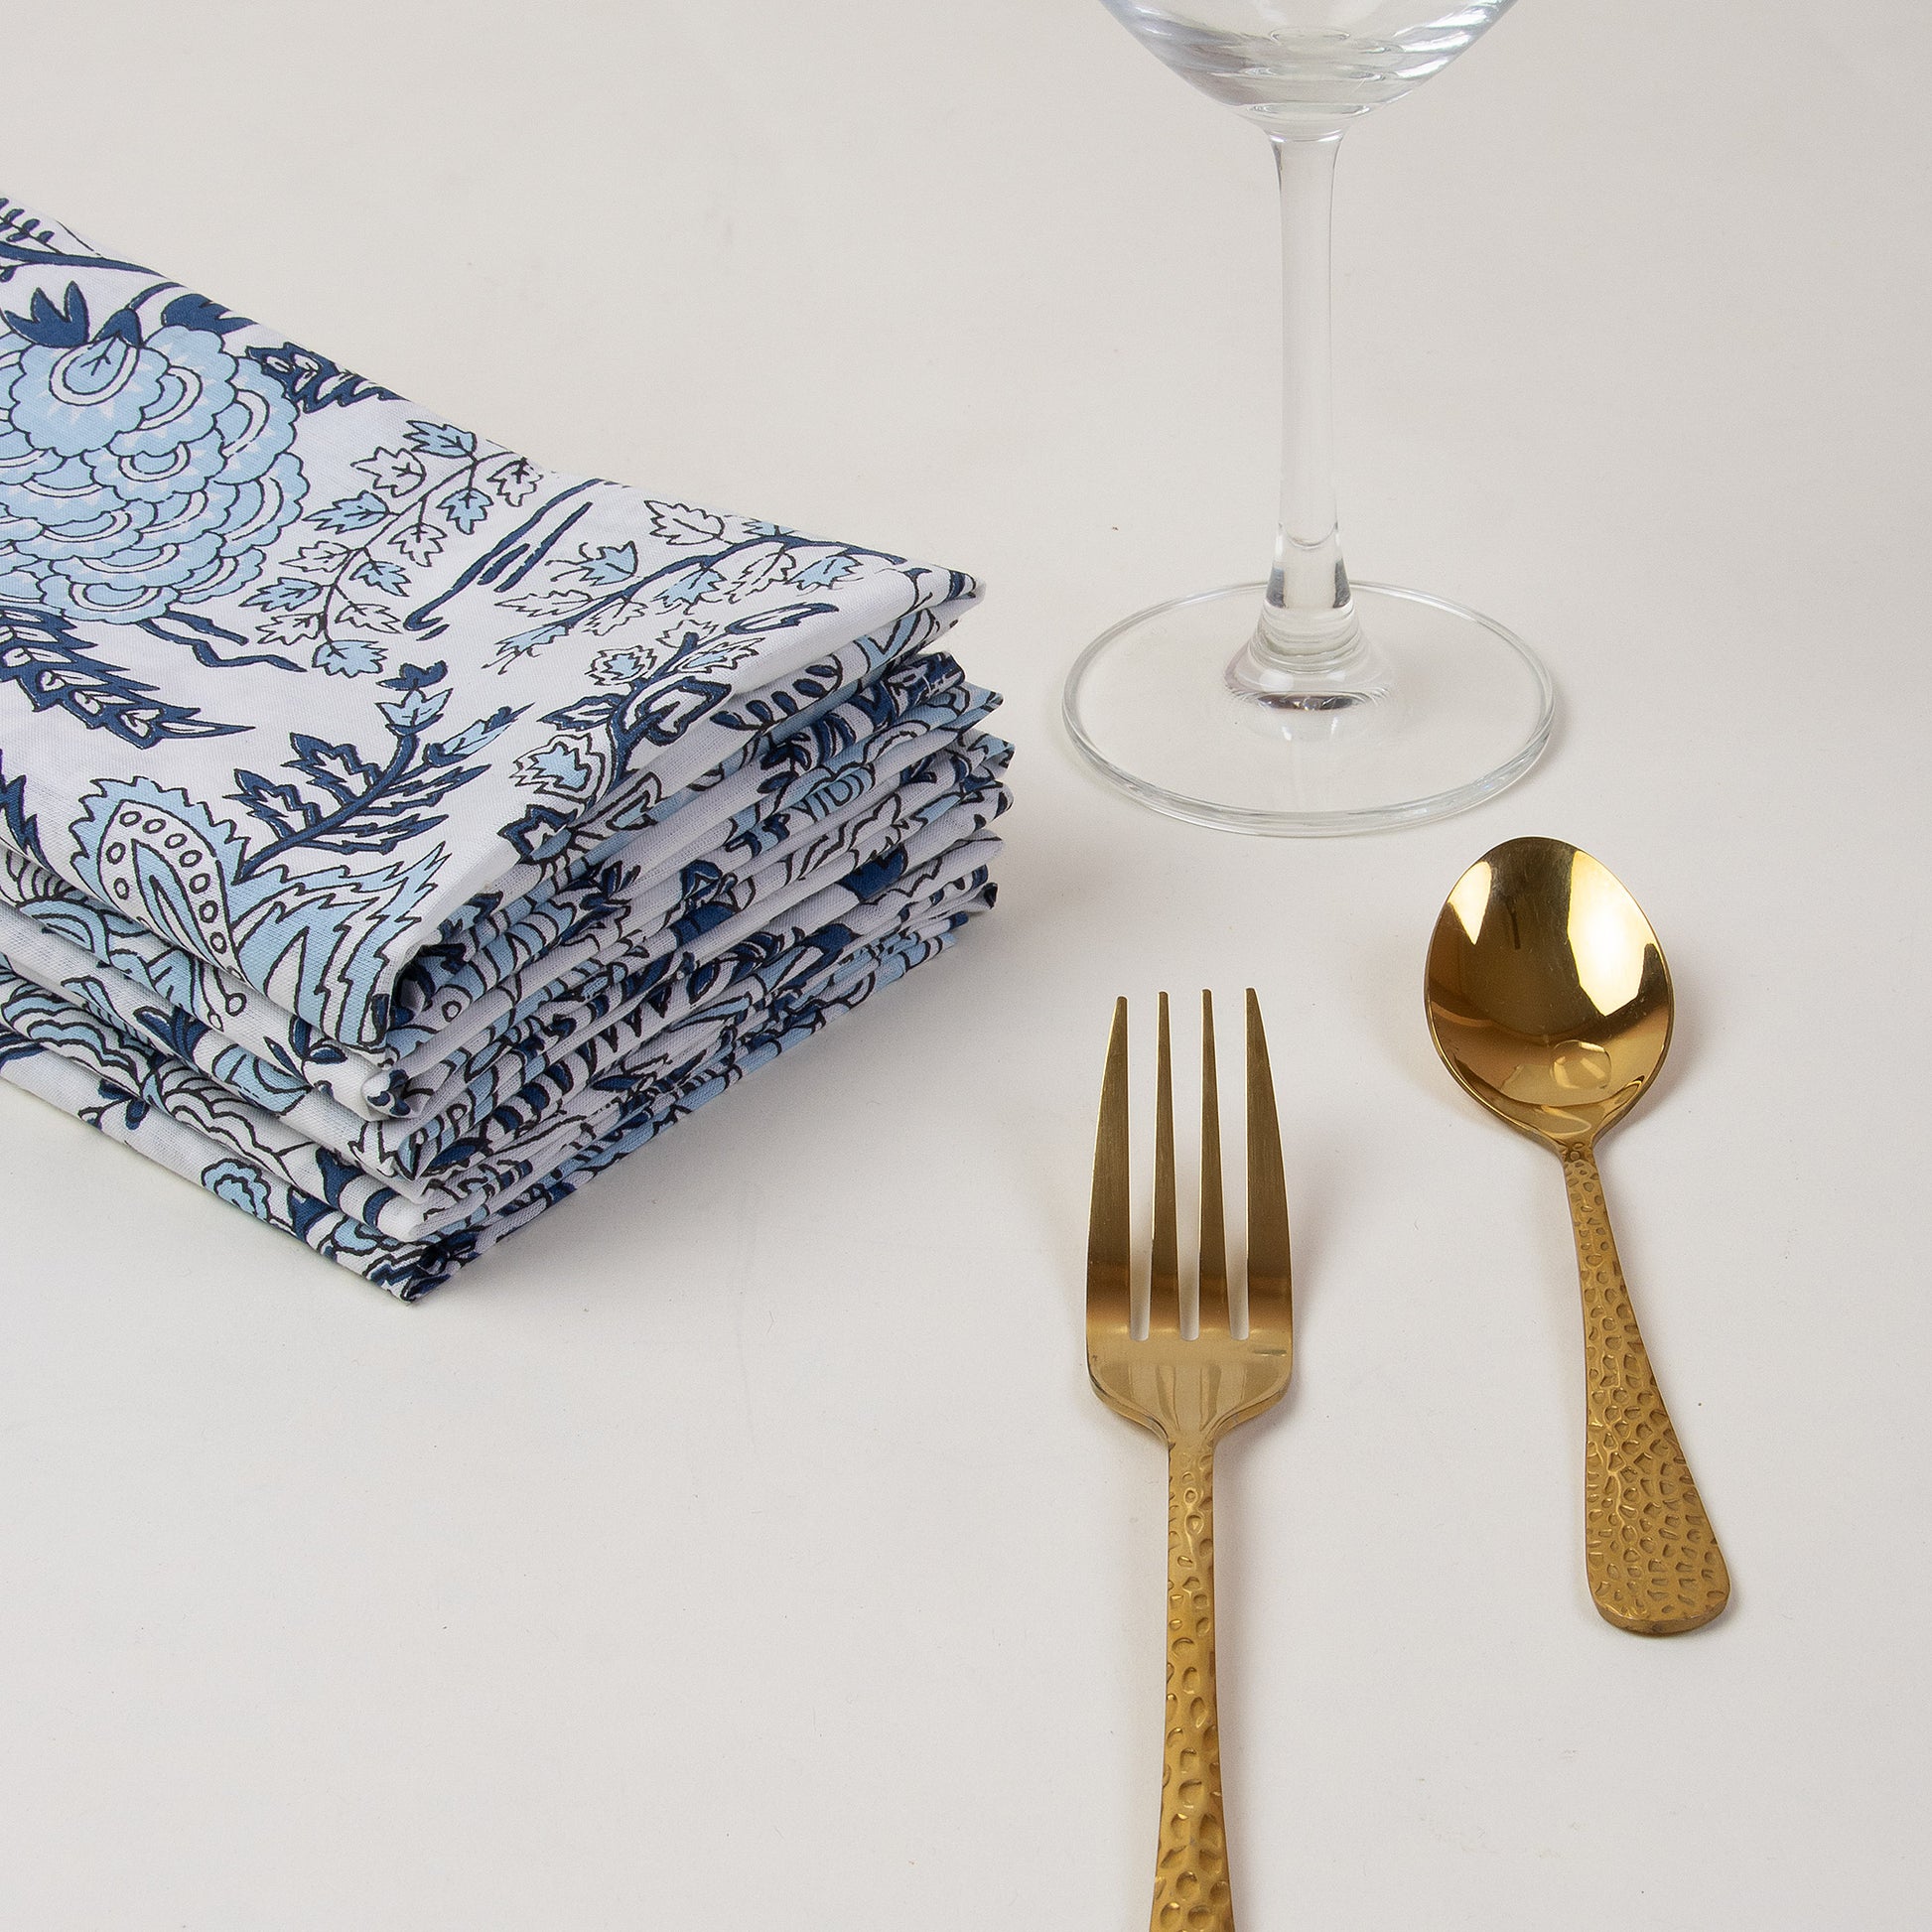 Hand Block Printed Soft Cotton Reusable Cloth Napkins Online